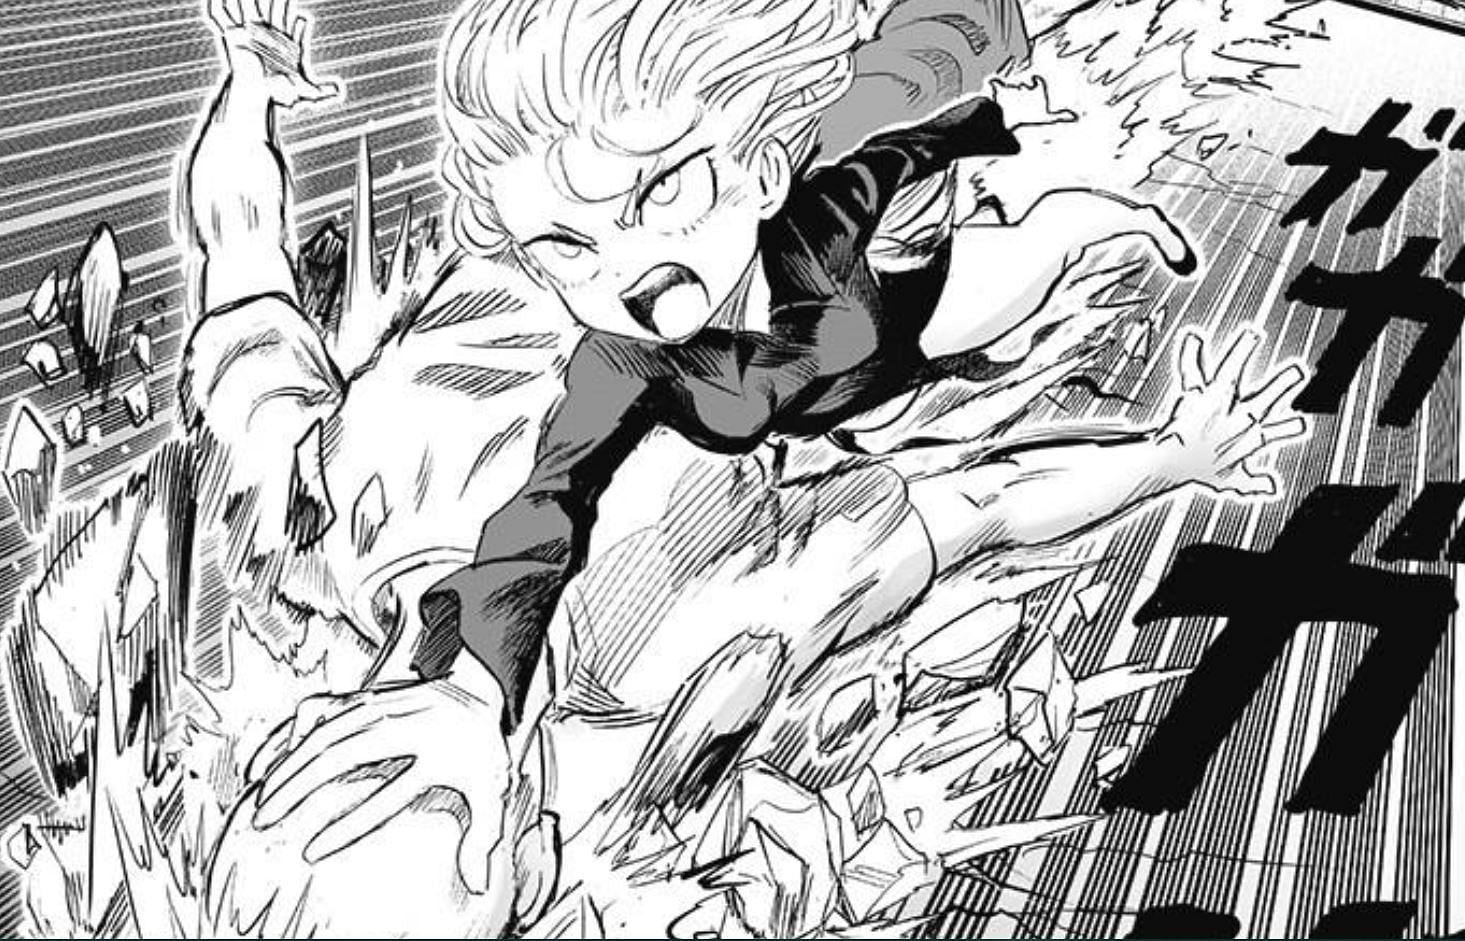 Tatsumaki dragging Saitama in One Punch Man chapter 181 (Image via Shueisha)